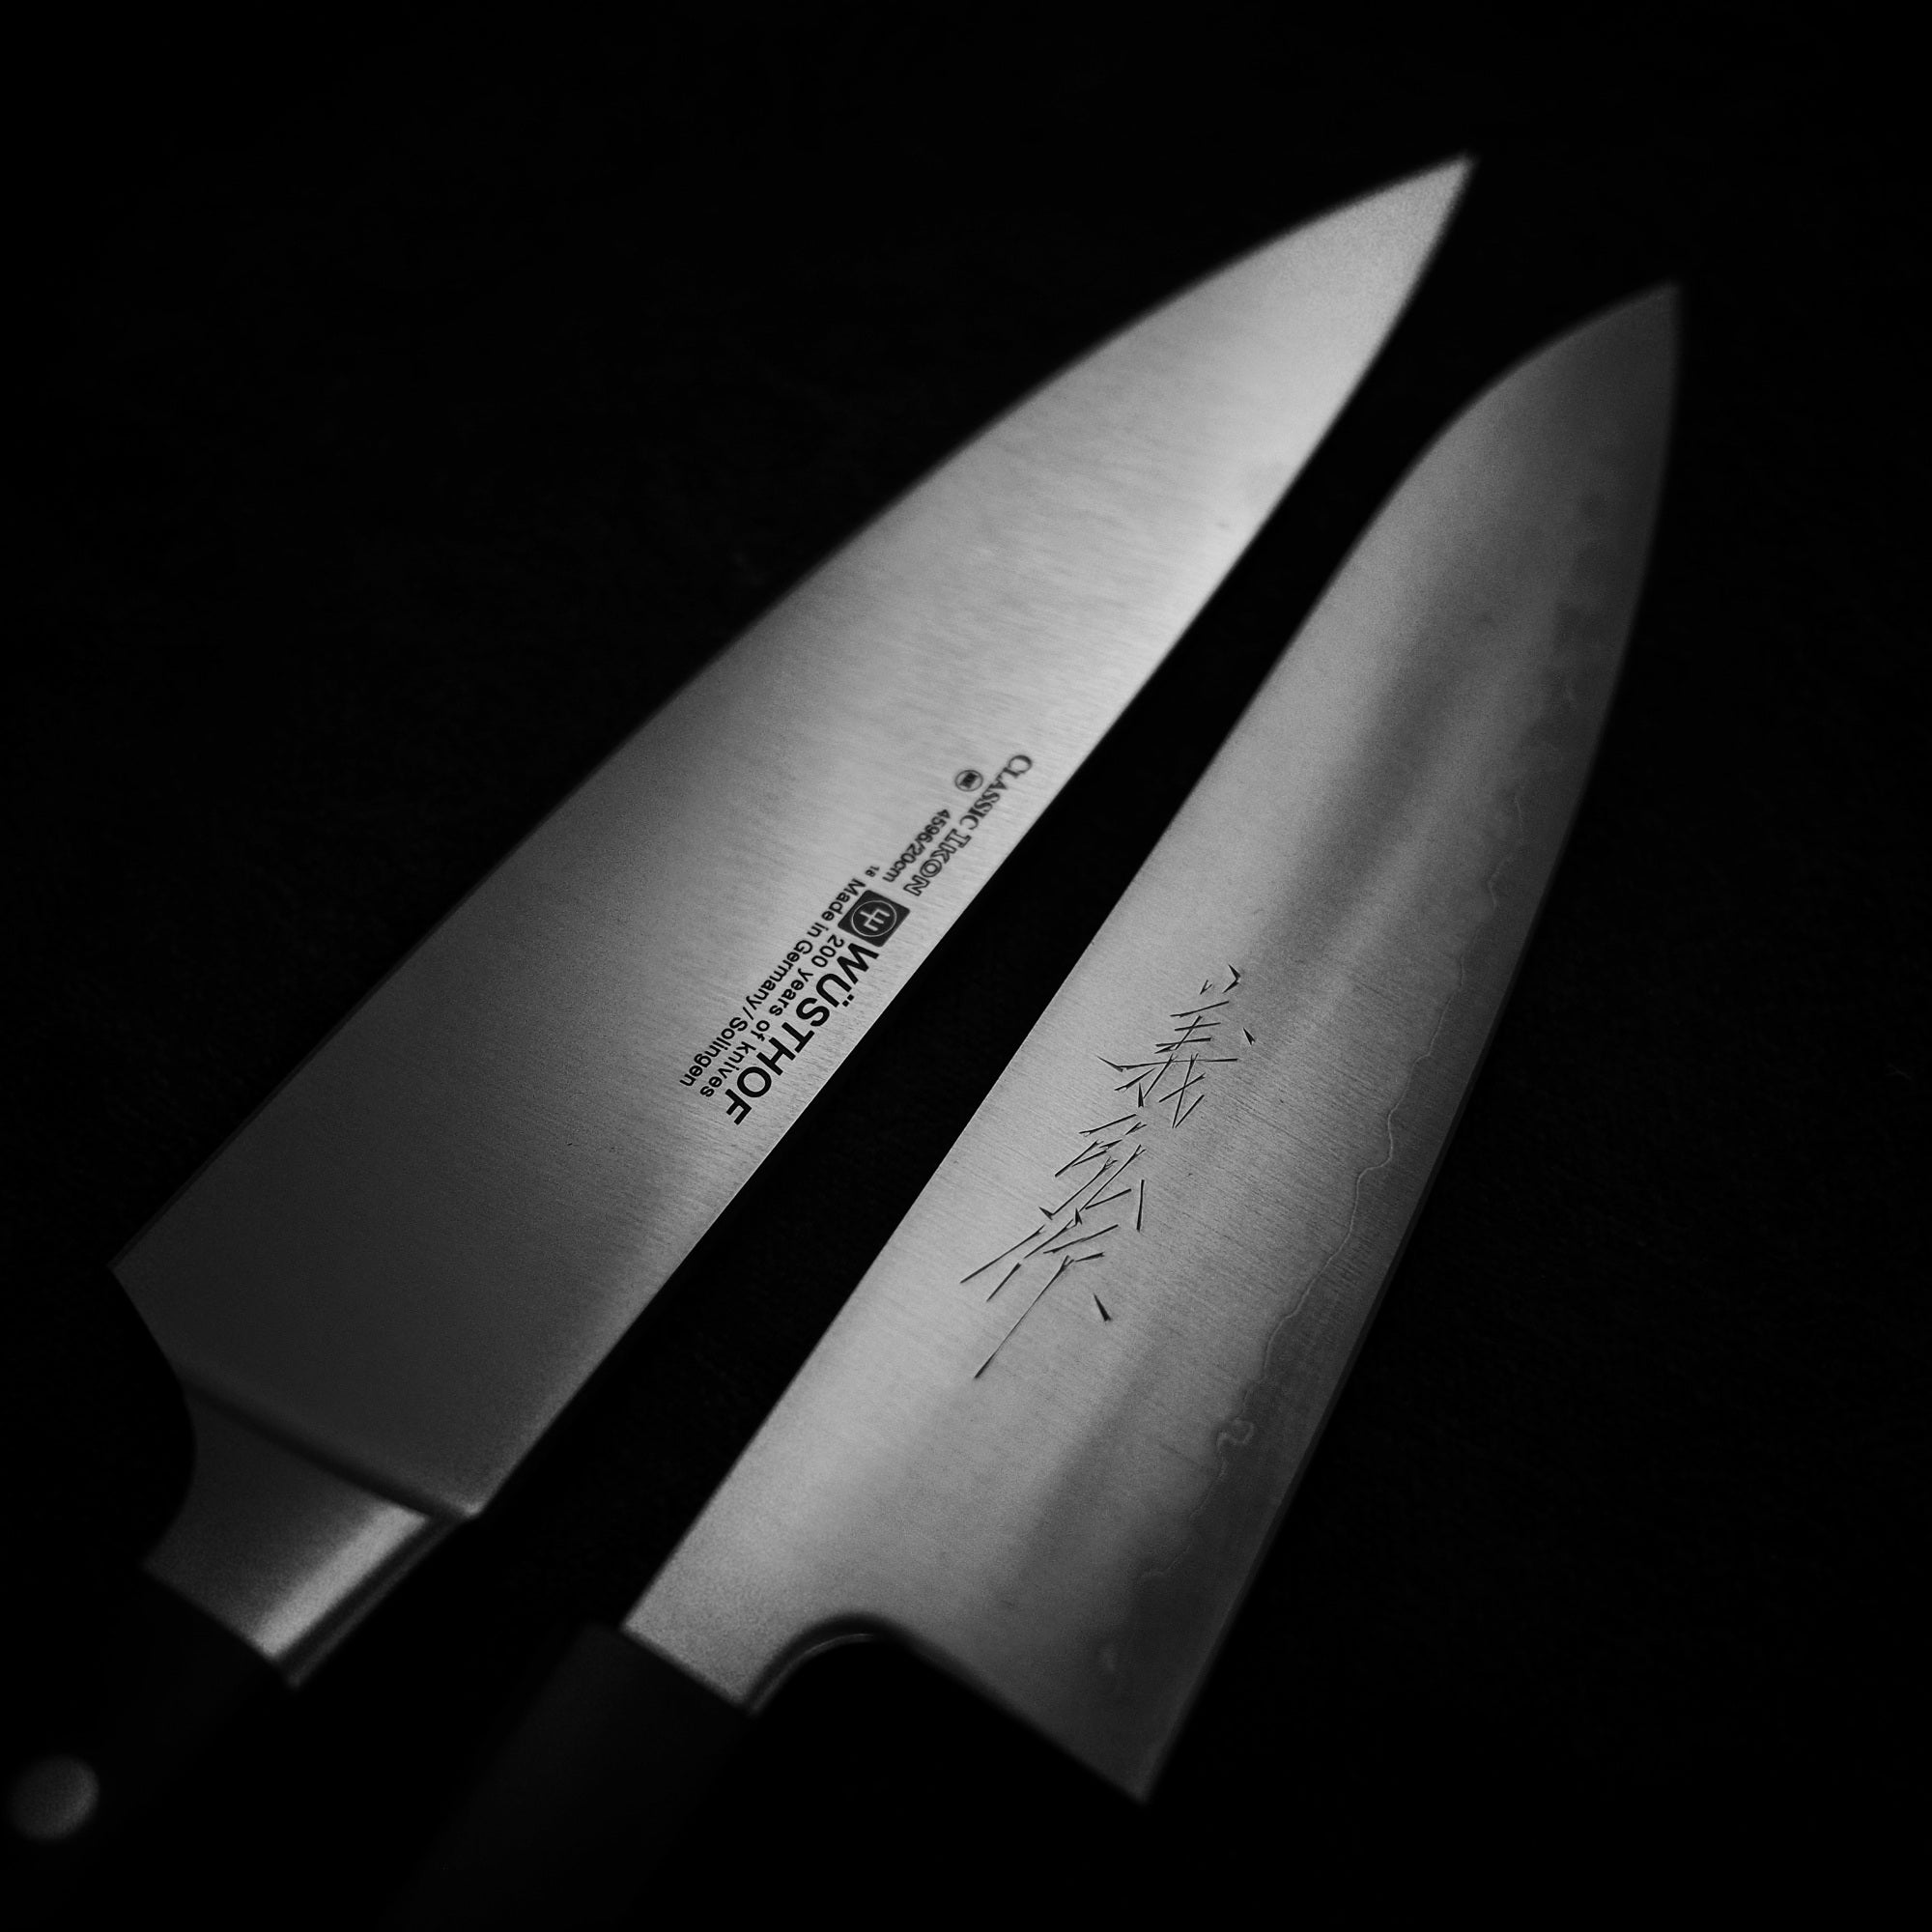 a wusthof chef's knife and a Yoshihiro gyuto knife